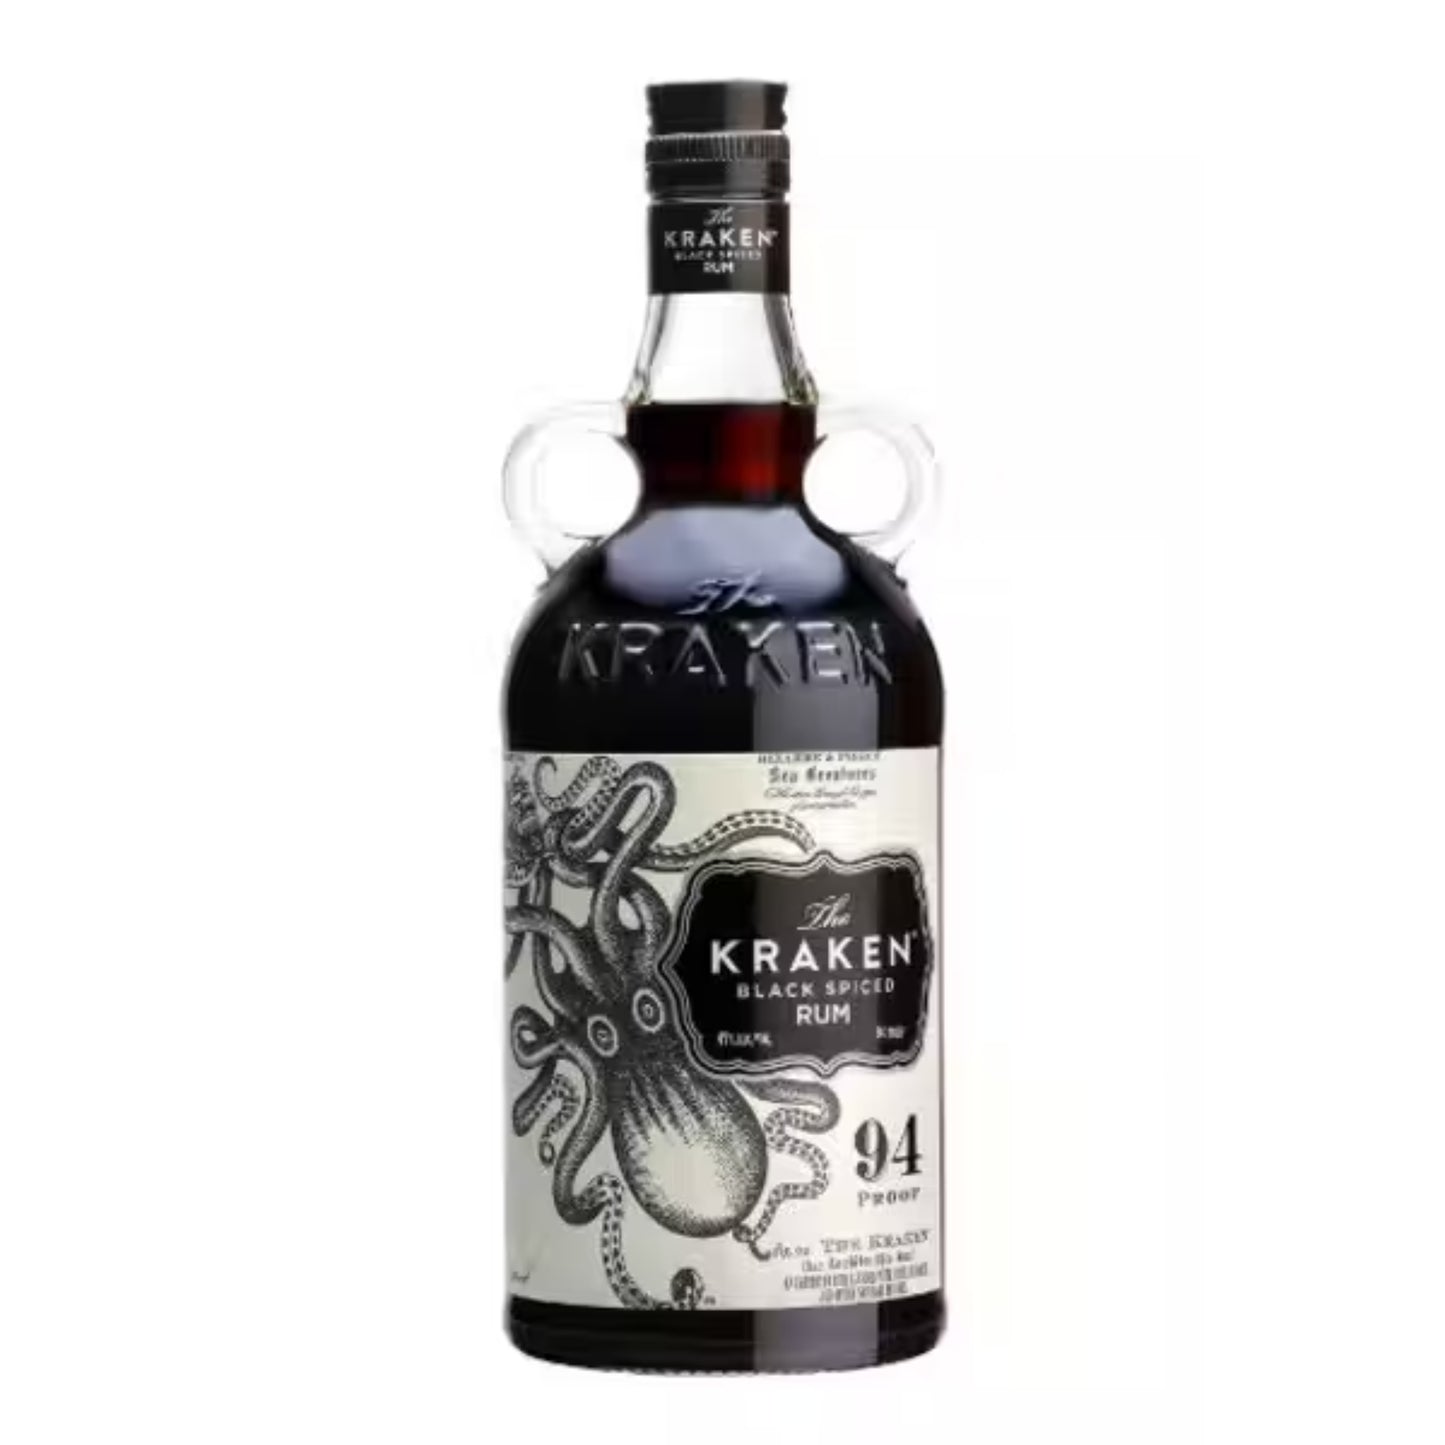 Kraken Black Spiced Rum 94 Proof - Liquor Geeks